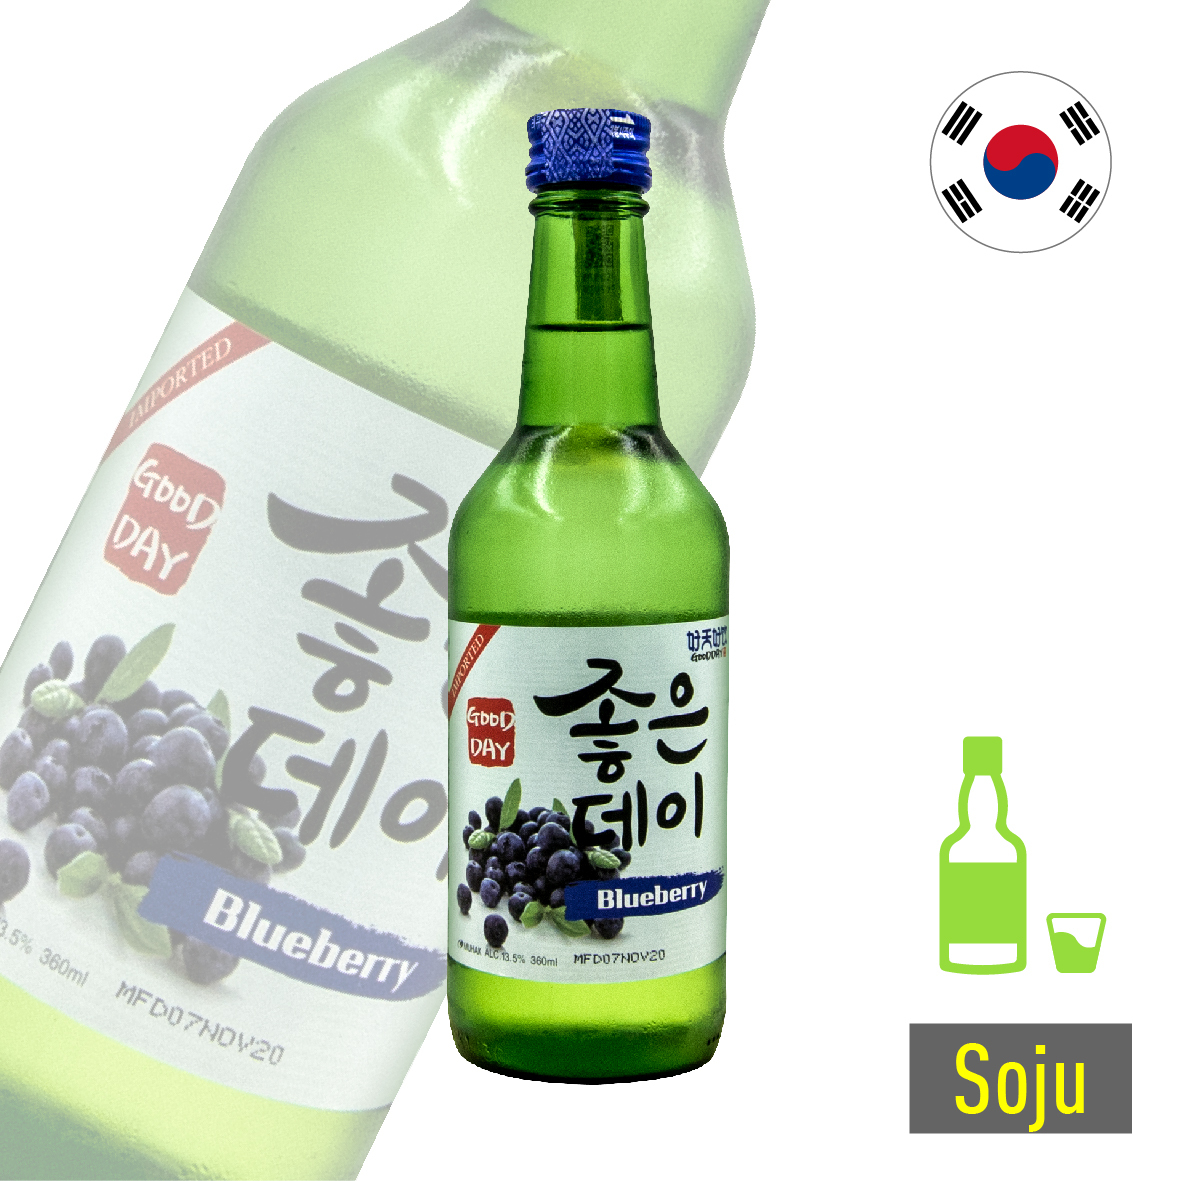 13-GooddaySoju-Blueberry-Korea-01.jpg